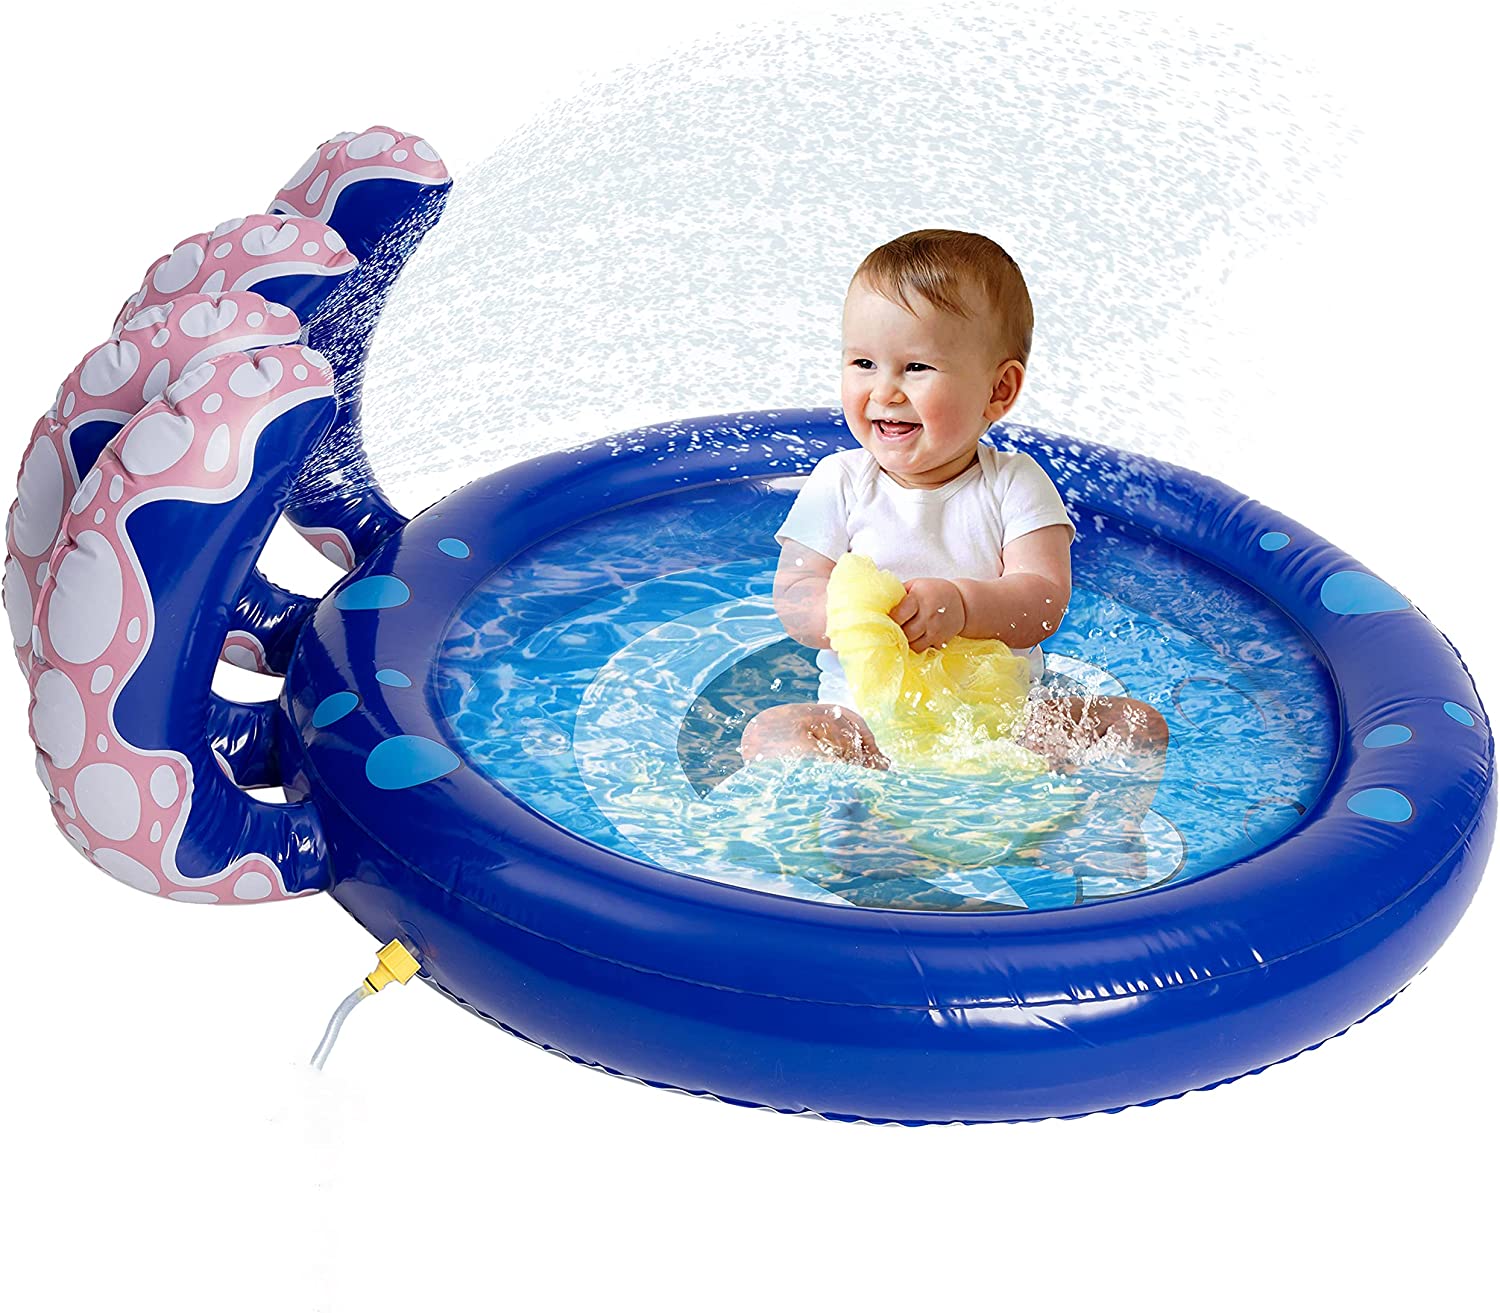 Inflatable Sprinkler Splash Mat Octopus Pool Pad, Toddlers Pool Wading Swimming Outdoor Sprinkler 47 for Kids Summer Fun